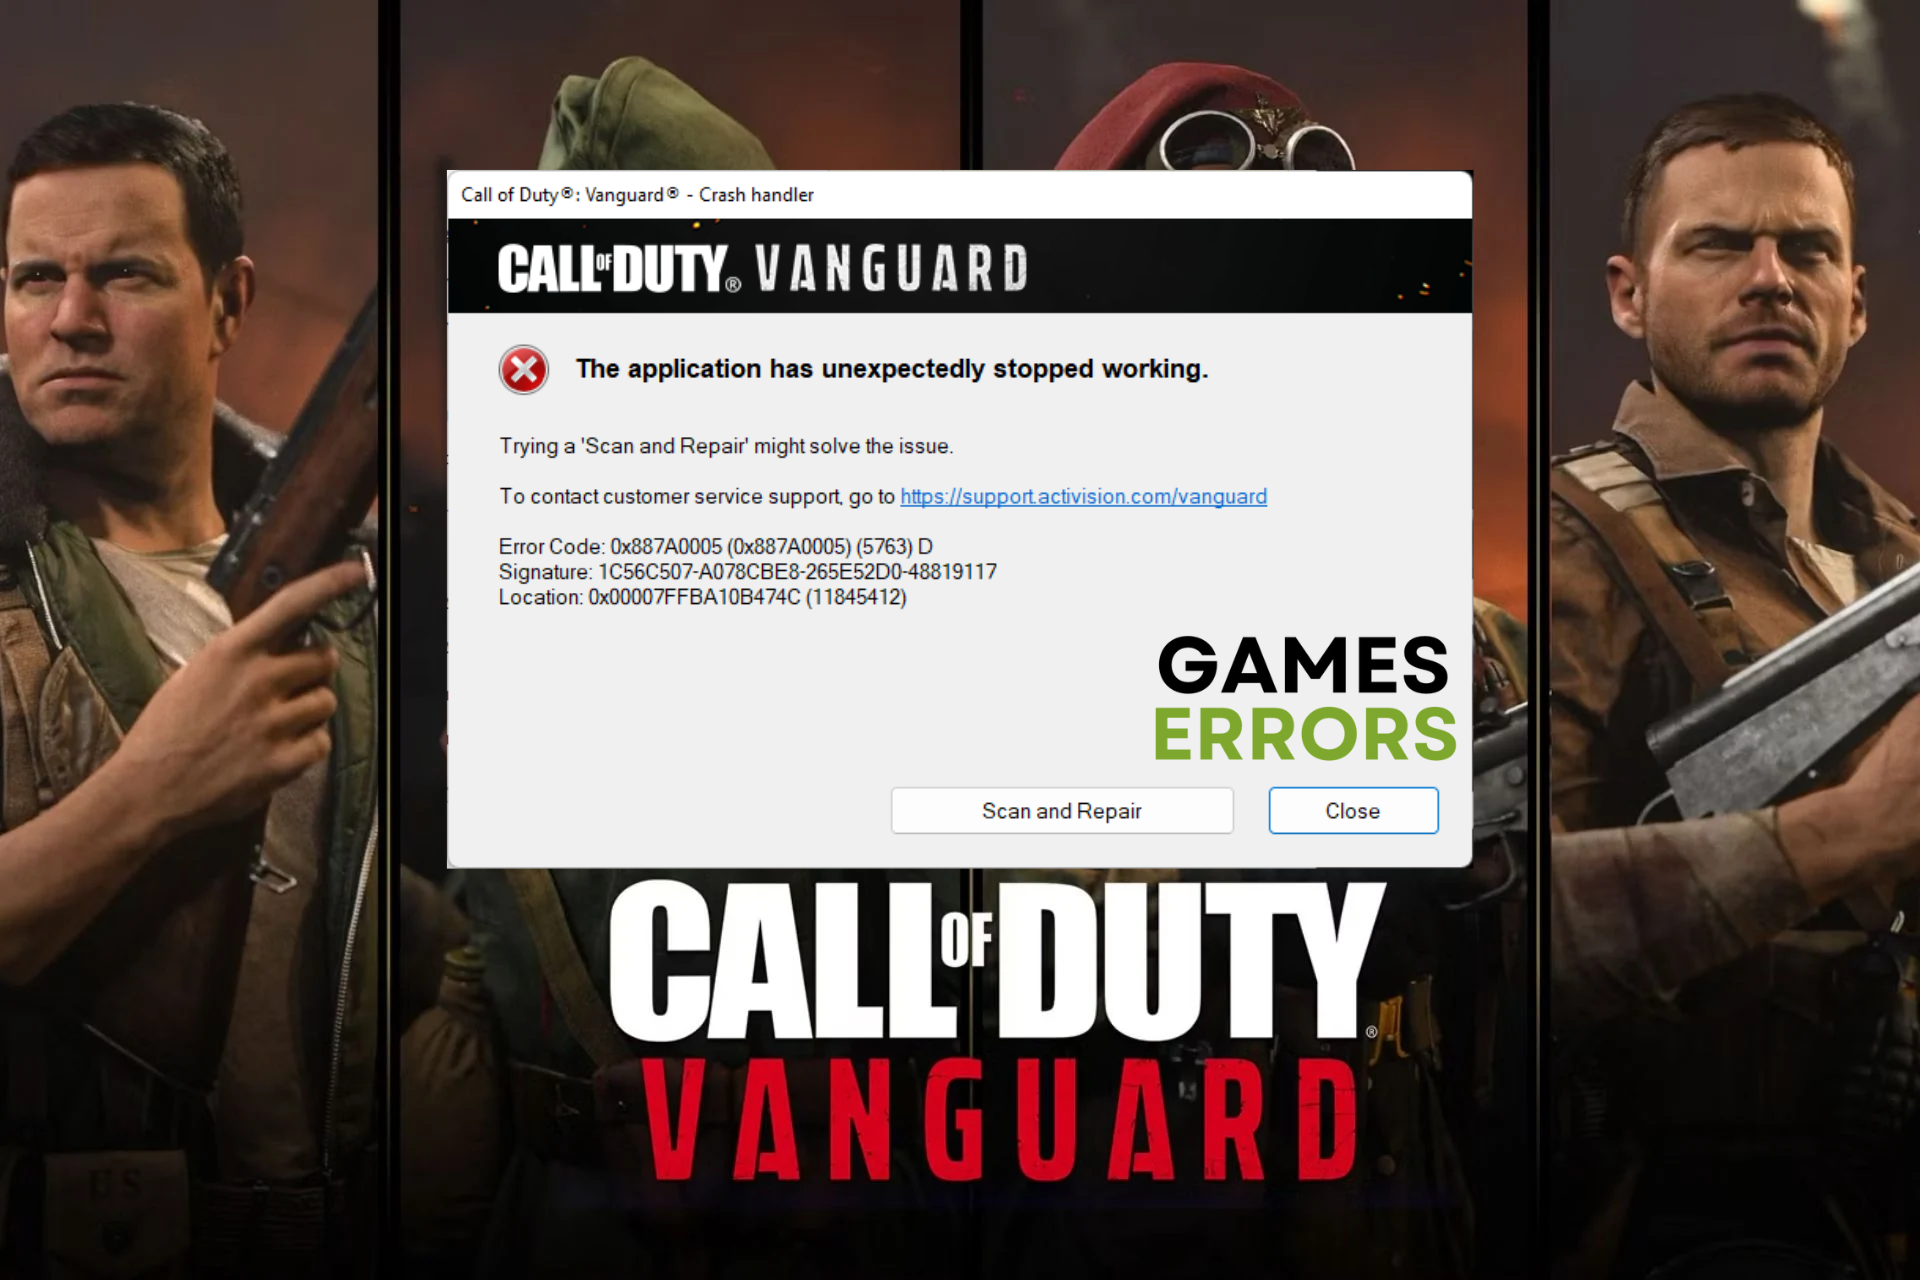 vanguard keeps crashing